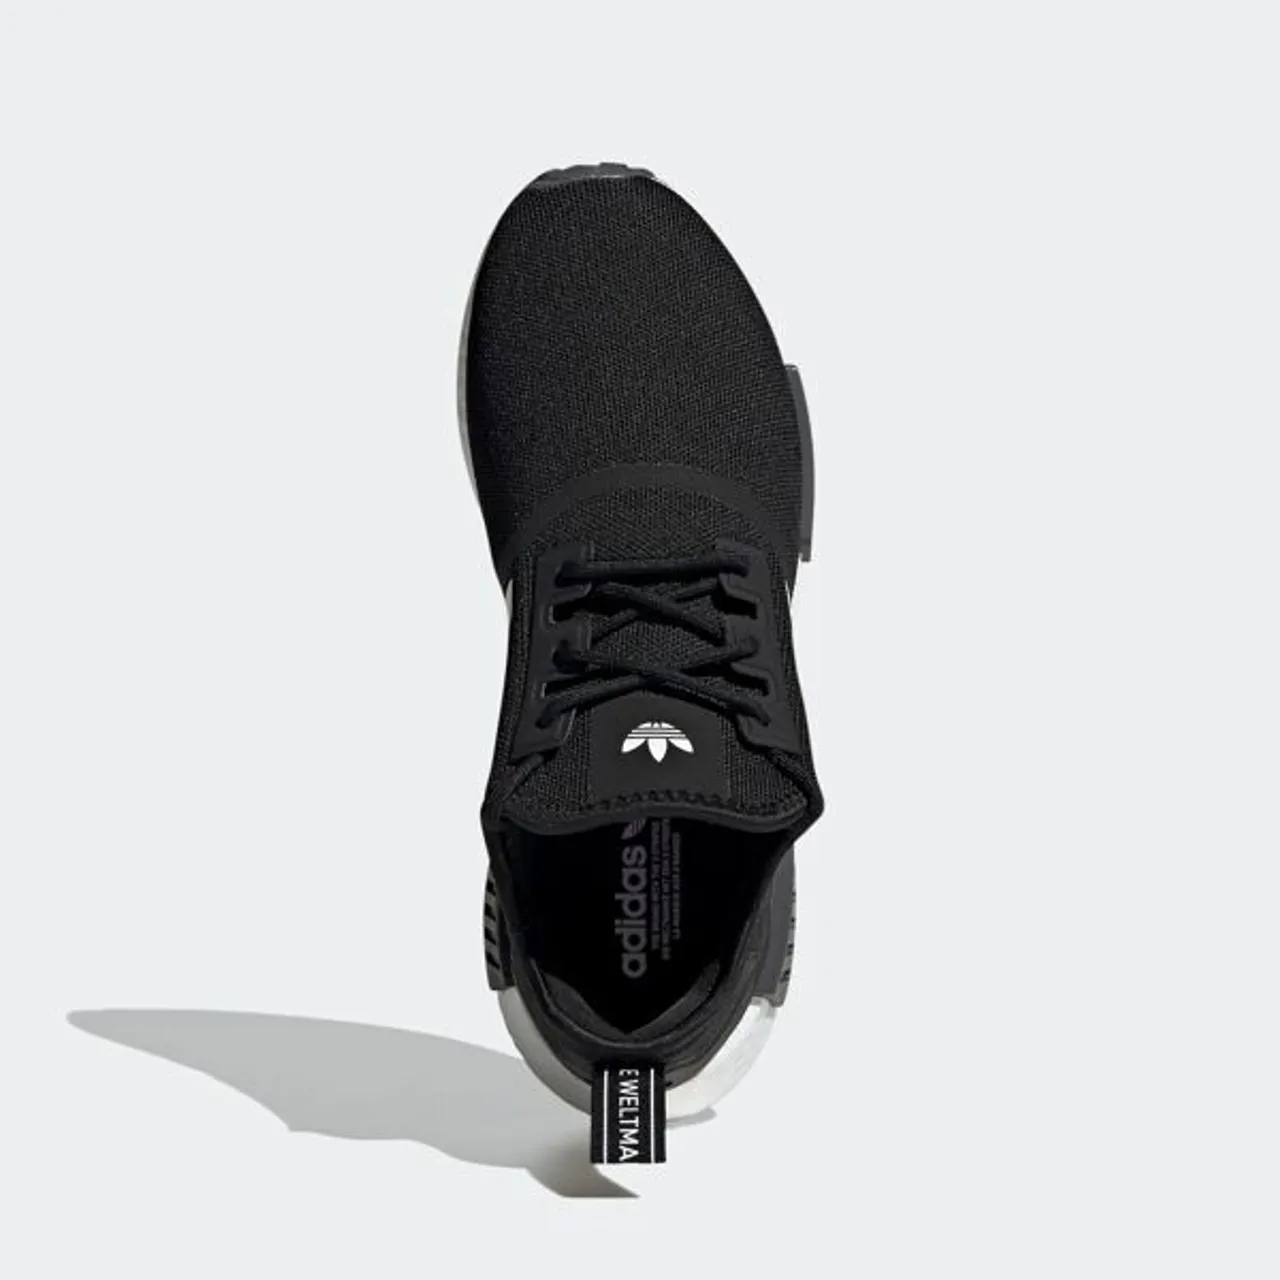 Sneaker ADIDAS ORIGINALS "NMD_R1" Gr. 44,5, schwarz-weiß (core black, cloud white, grey five) Schuhe Stoffschuhe Bestseller